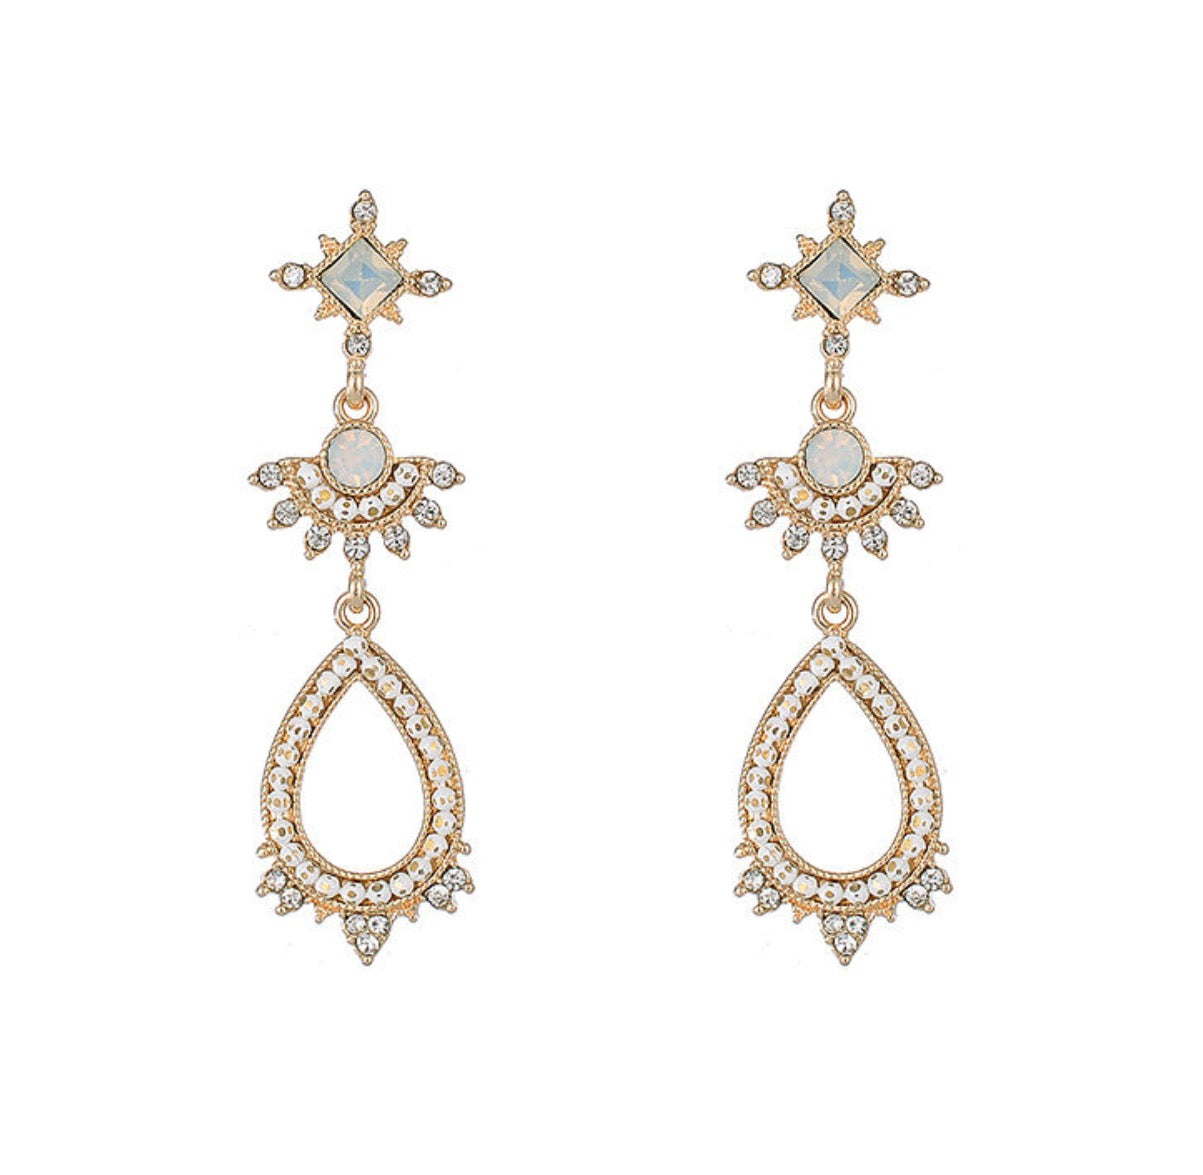 Elegant antique style drop earrings